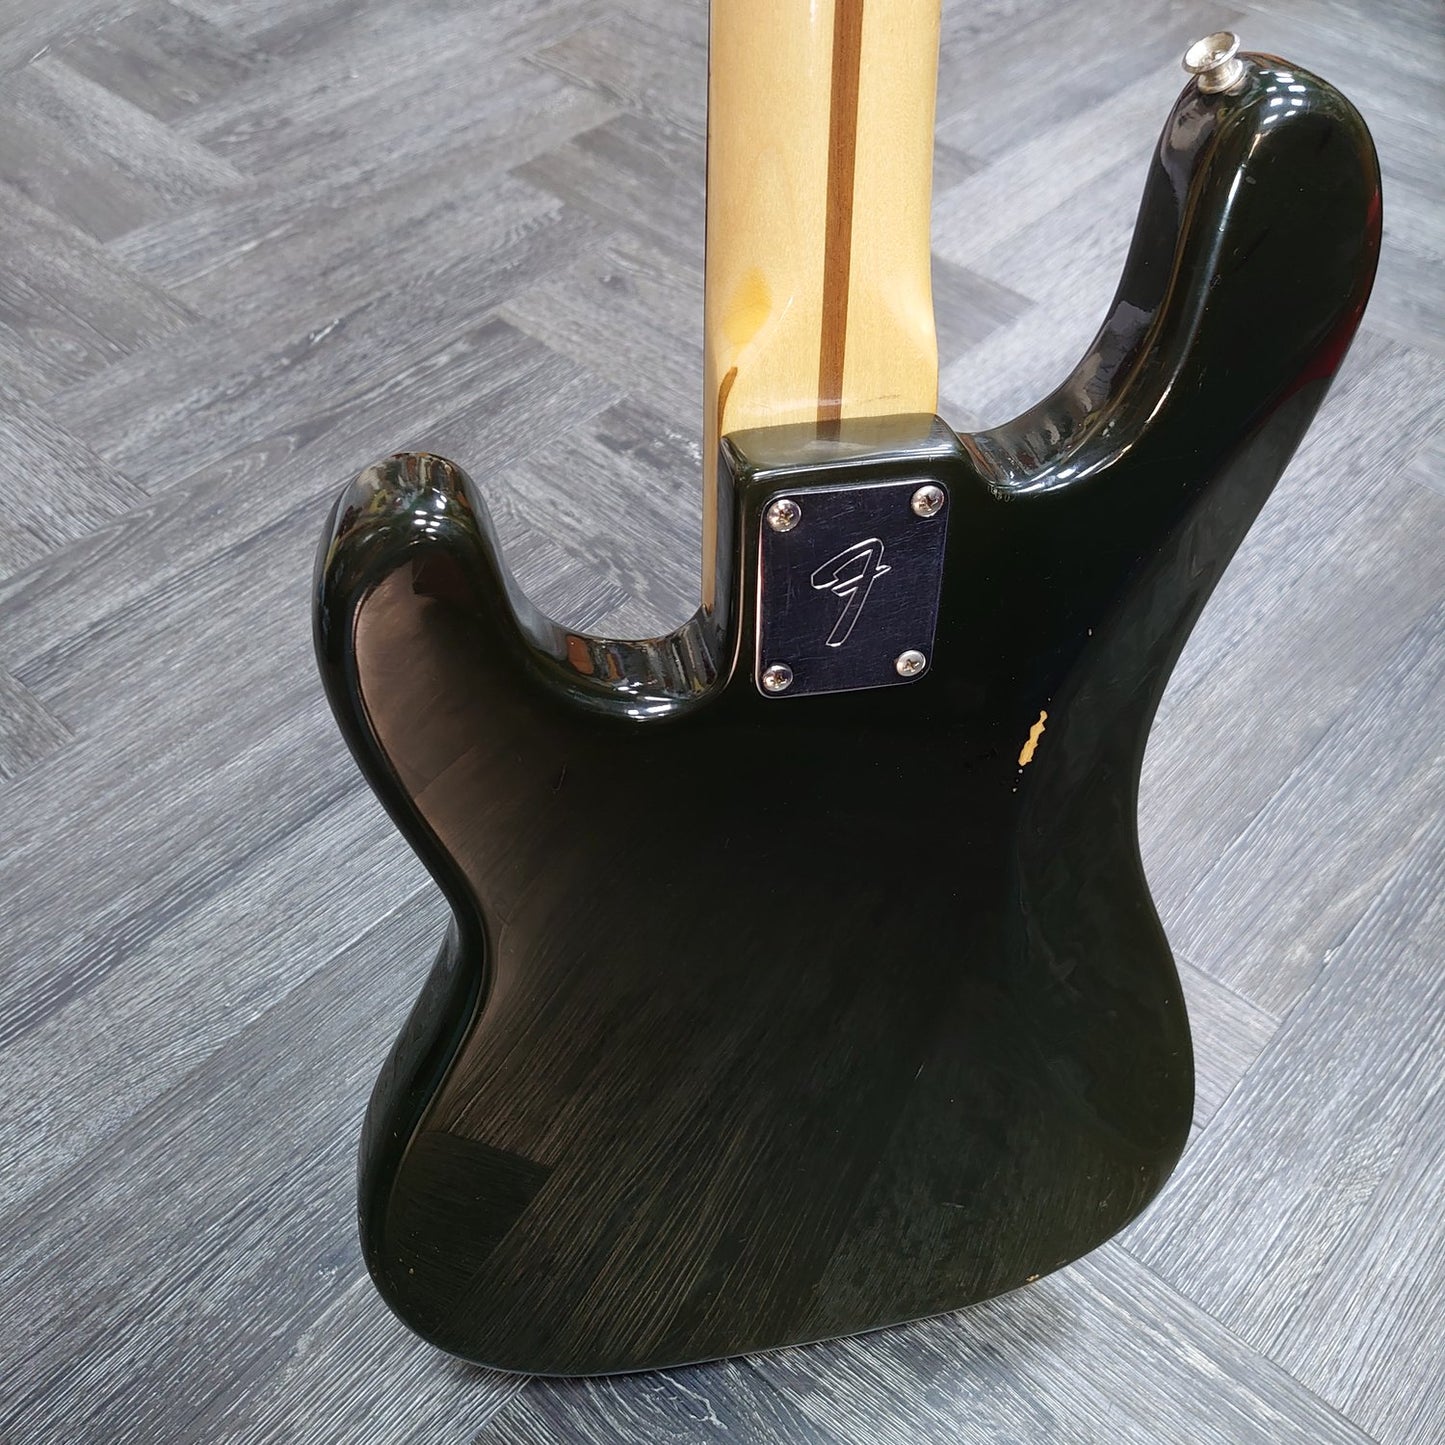 Fender Precision Bass ~ Black [1981]